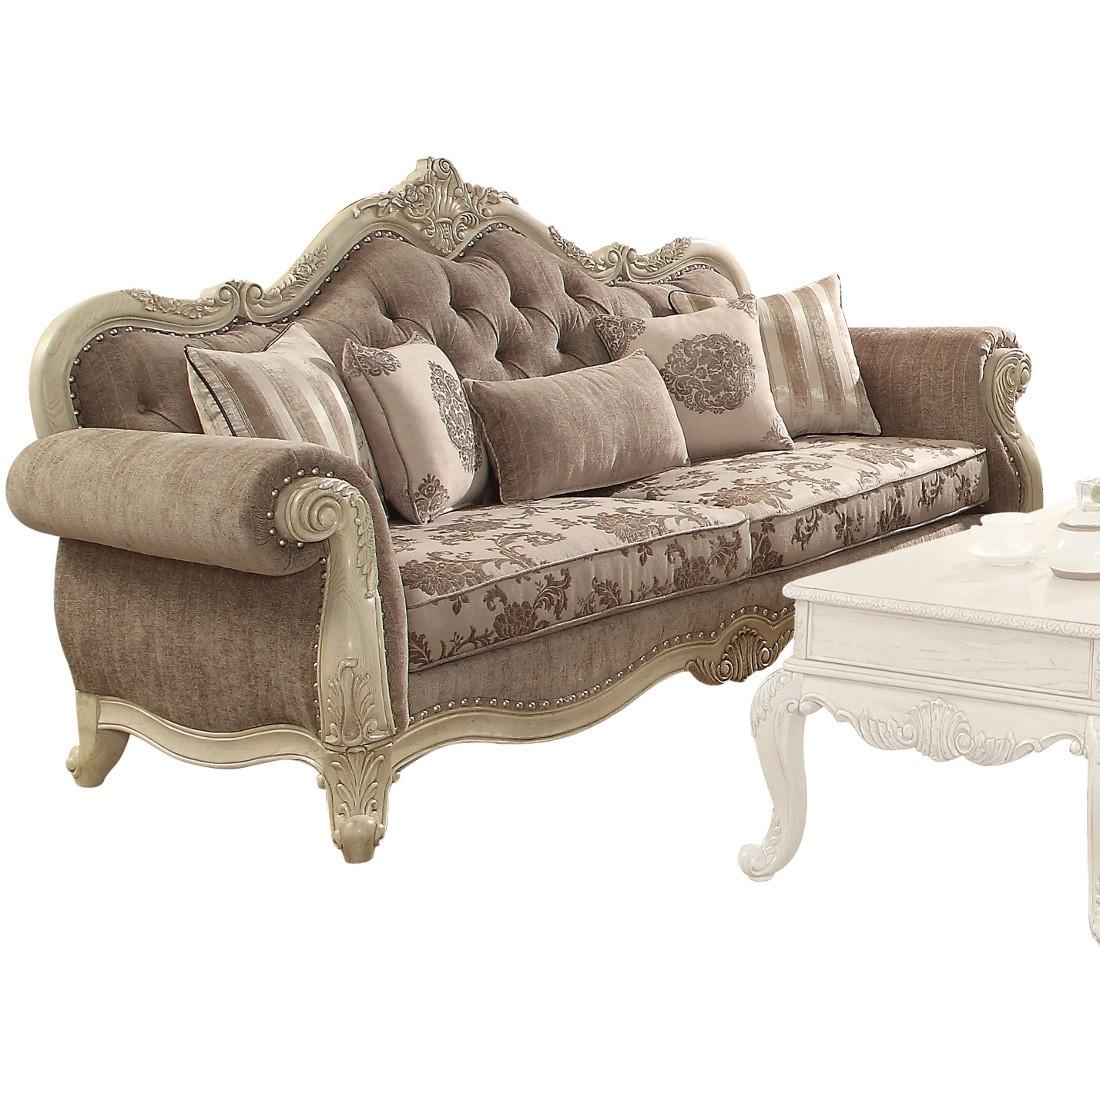 Classic, Traditional Sofa Ragenardus-WH-56020 Ragenardus-WH-56020 in Gray, Beige Fabric